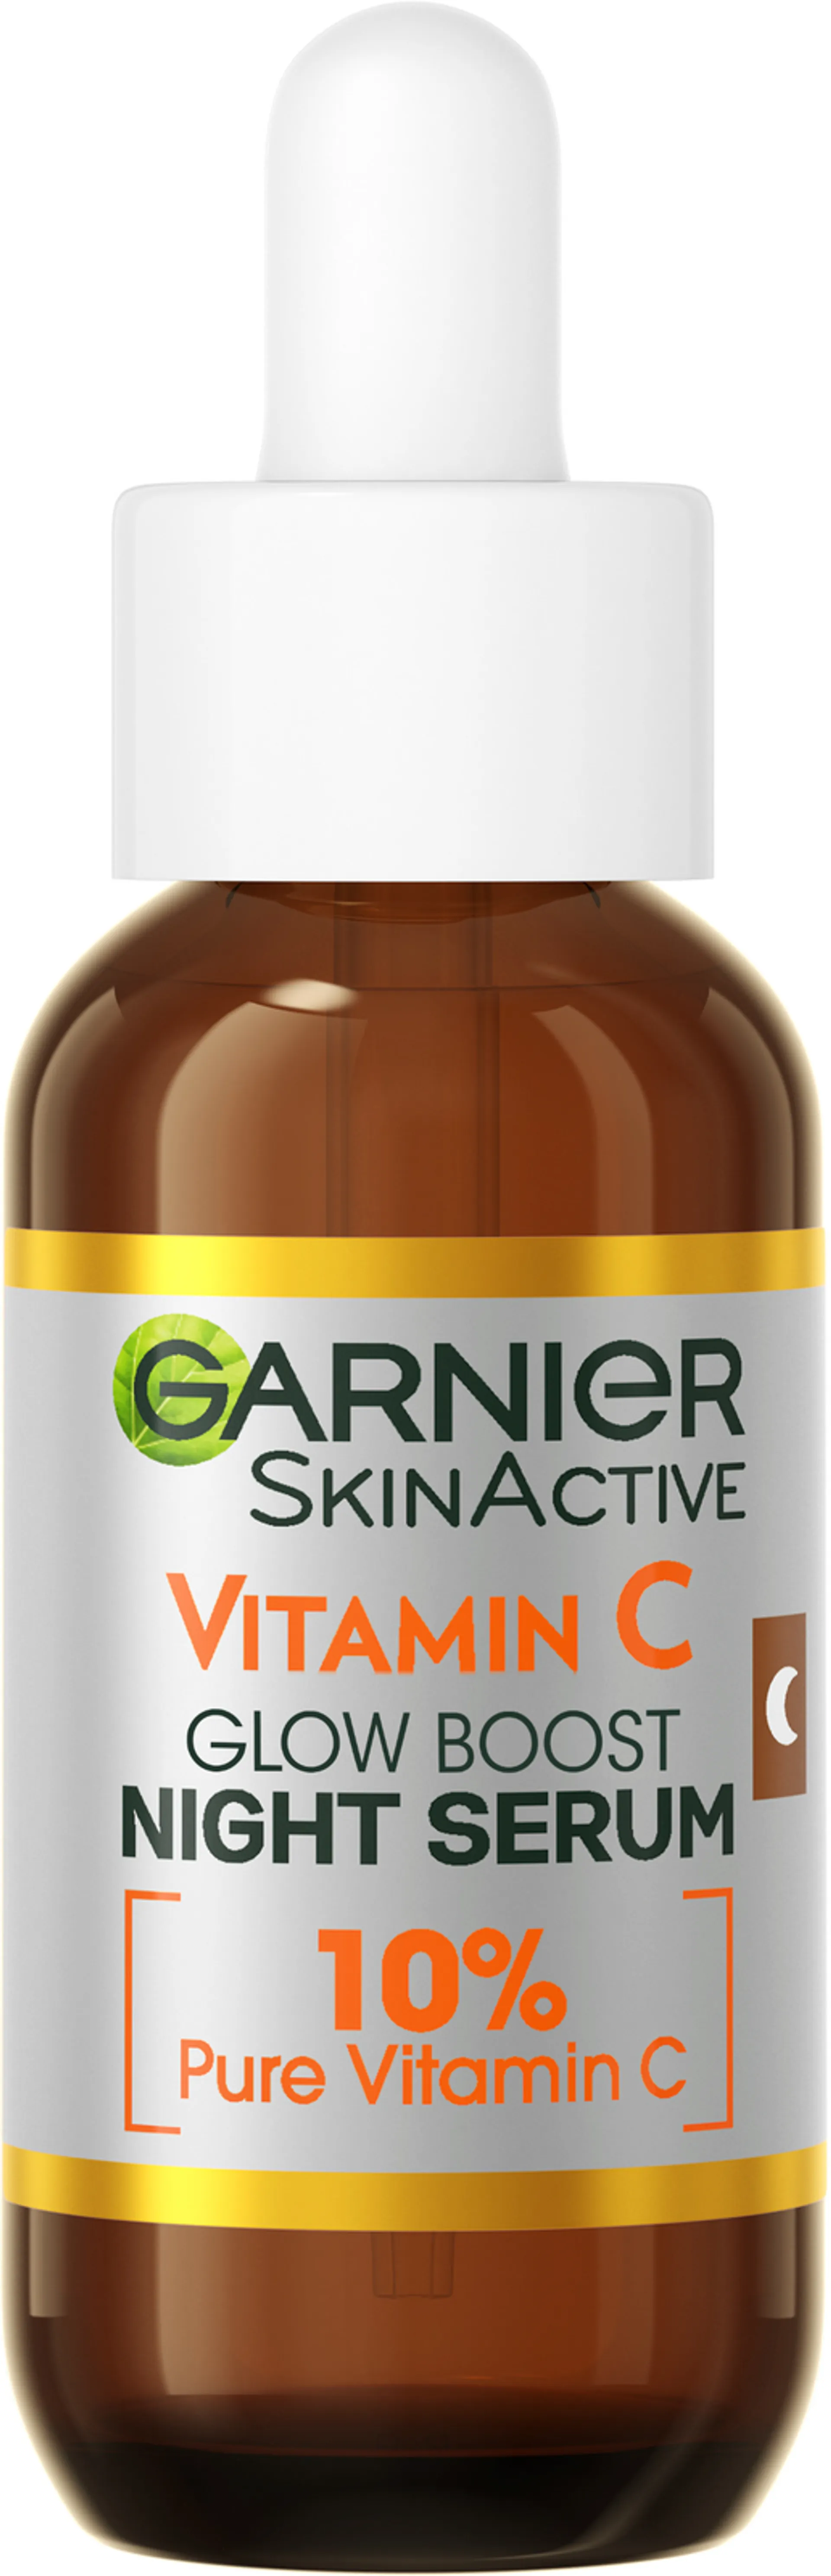 Garnier SkinActive Vitamin C Glow Boost 10% yöseerumi 30ml - 1